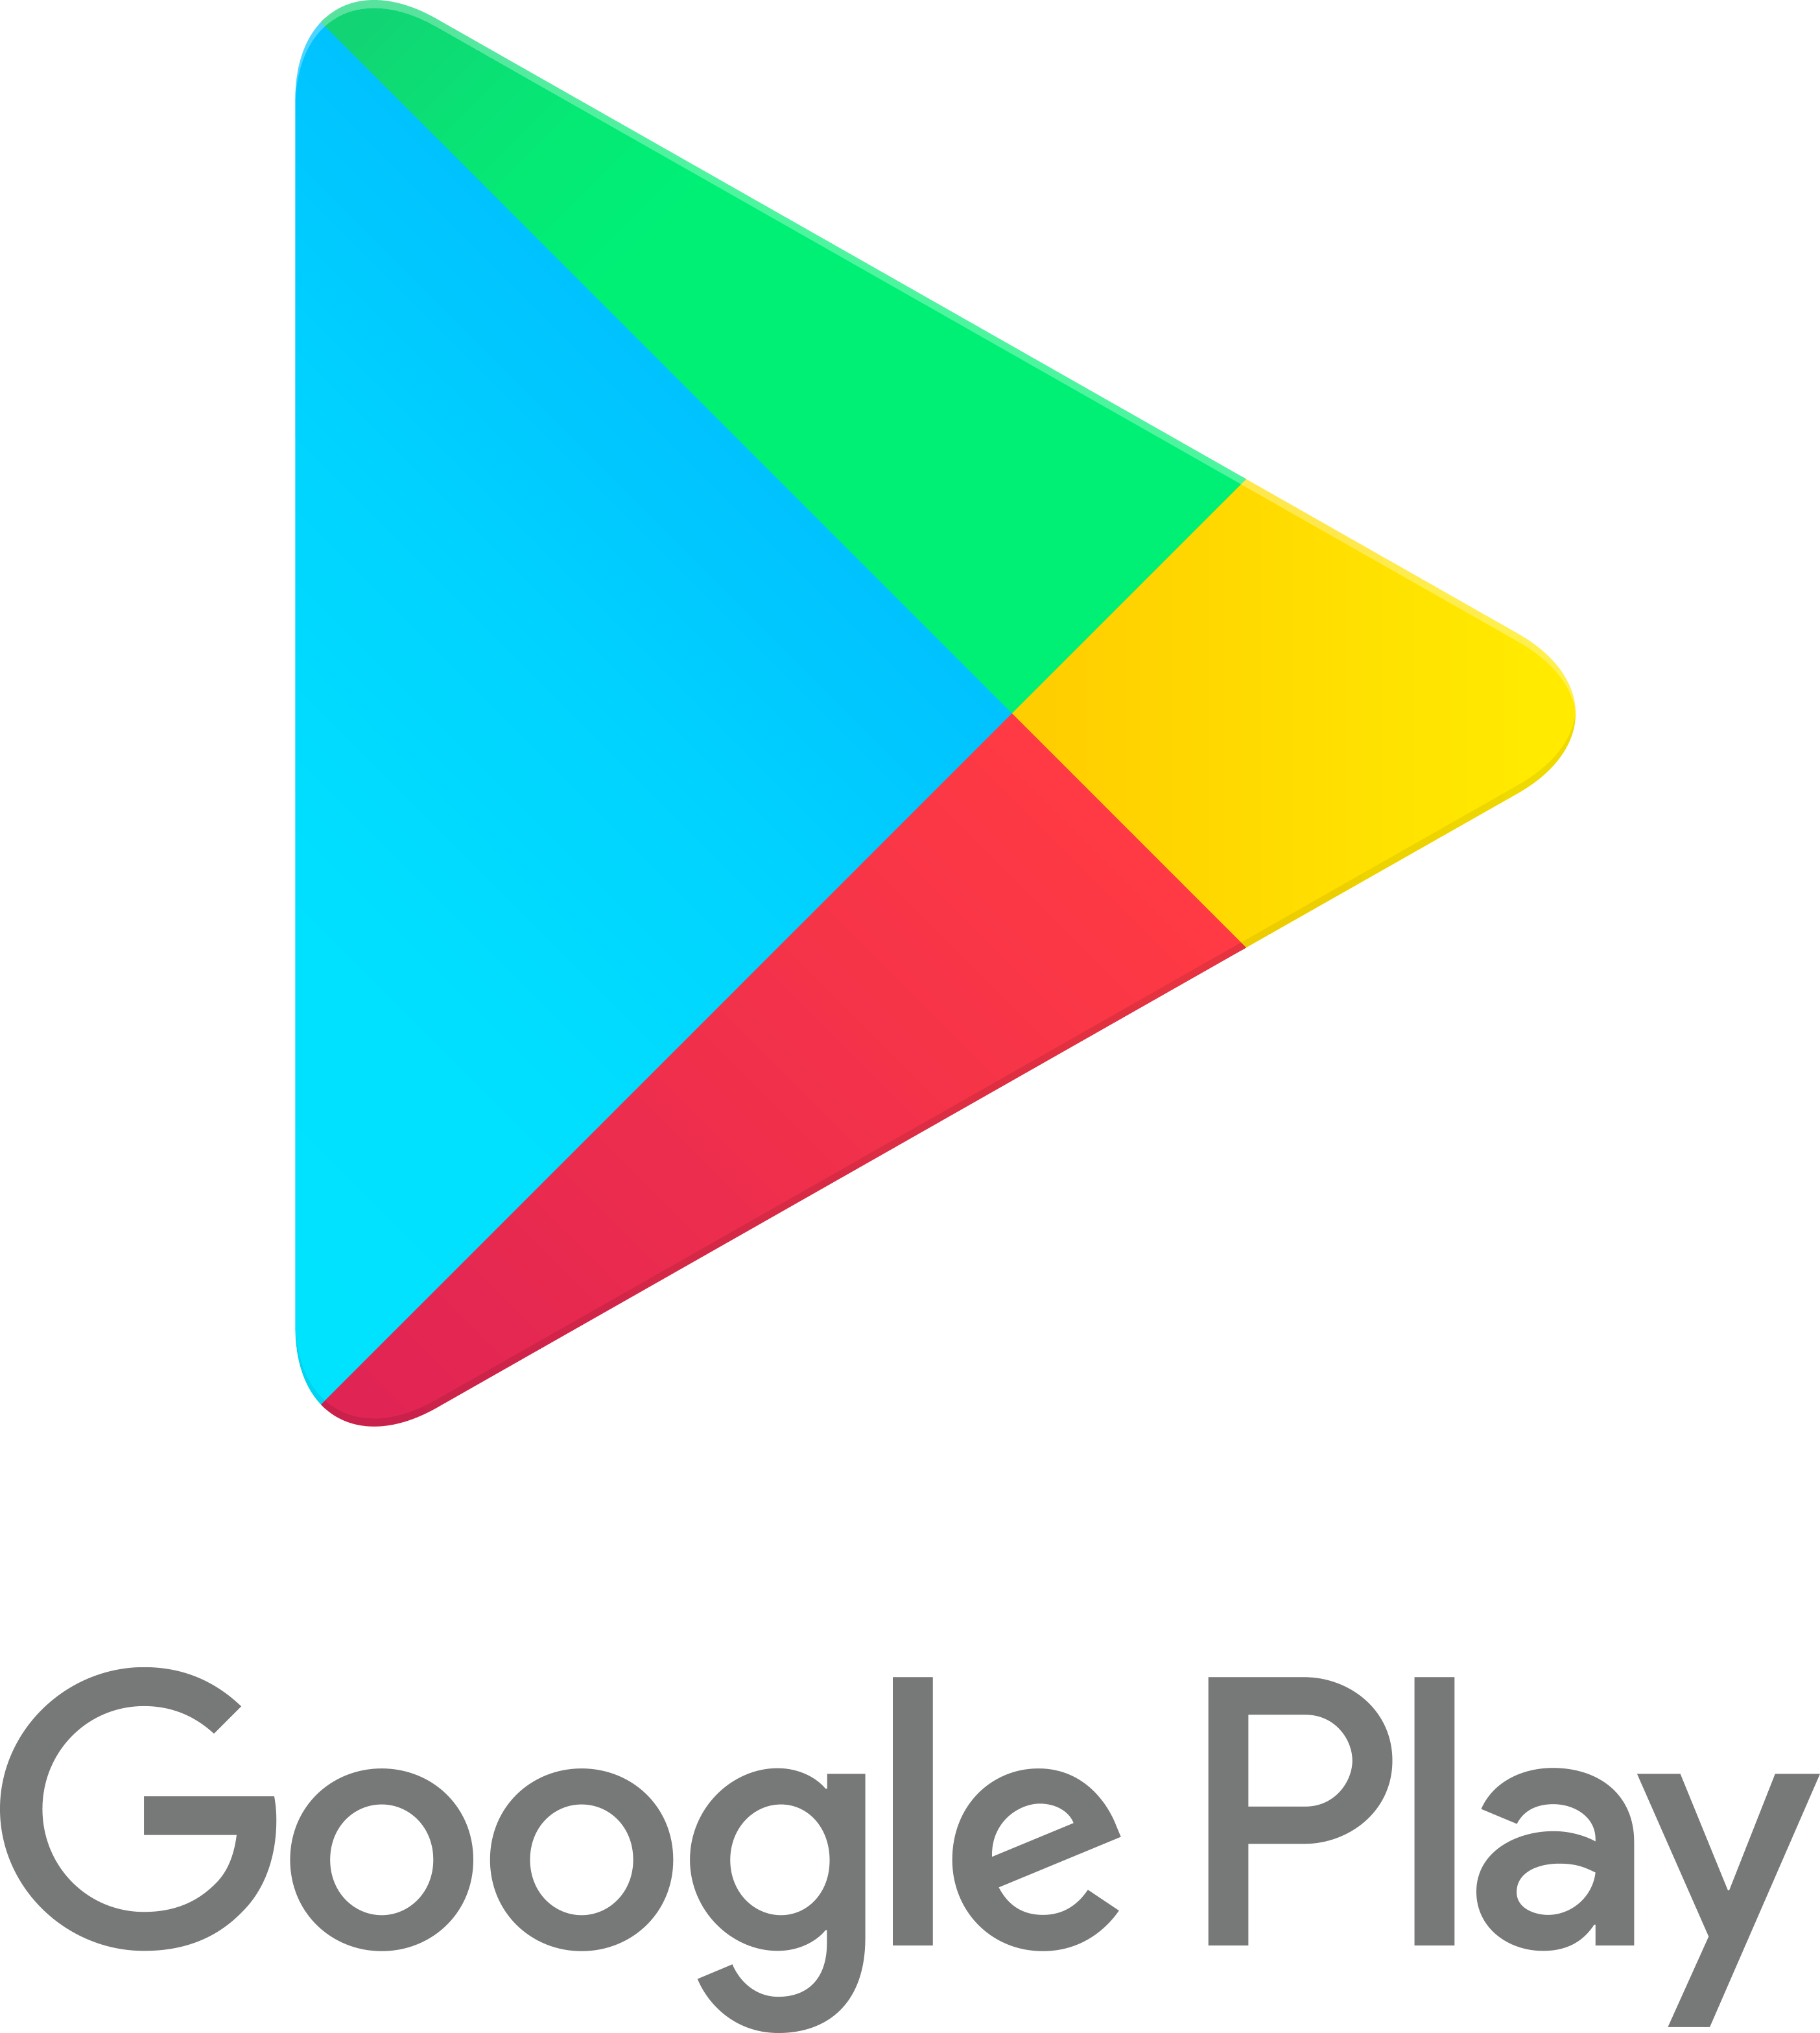 Google Play Books Logo - Partner Rewards Google Books one